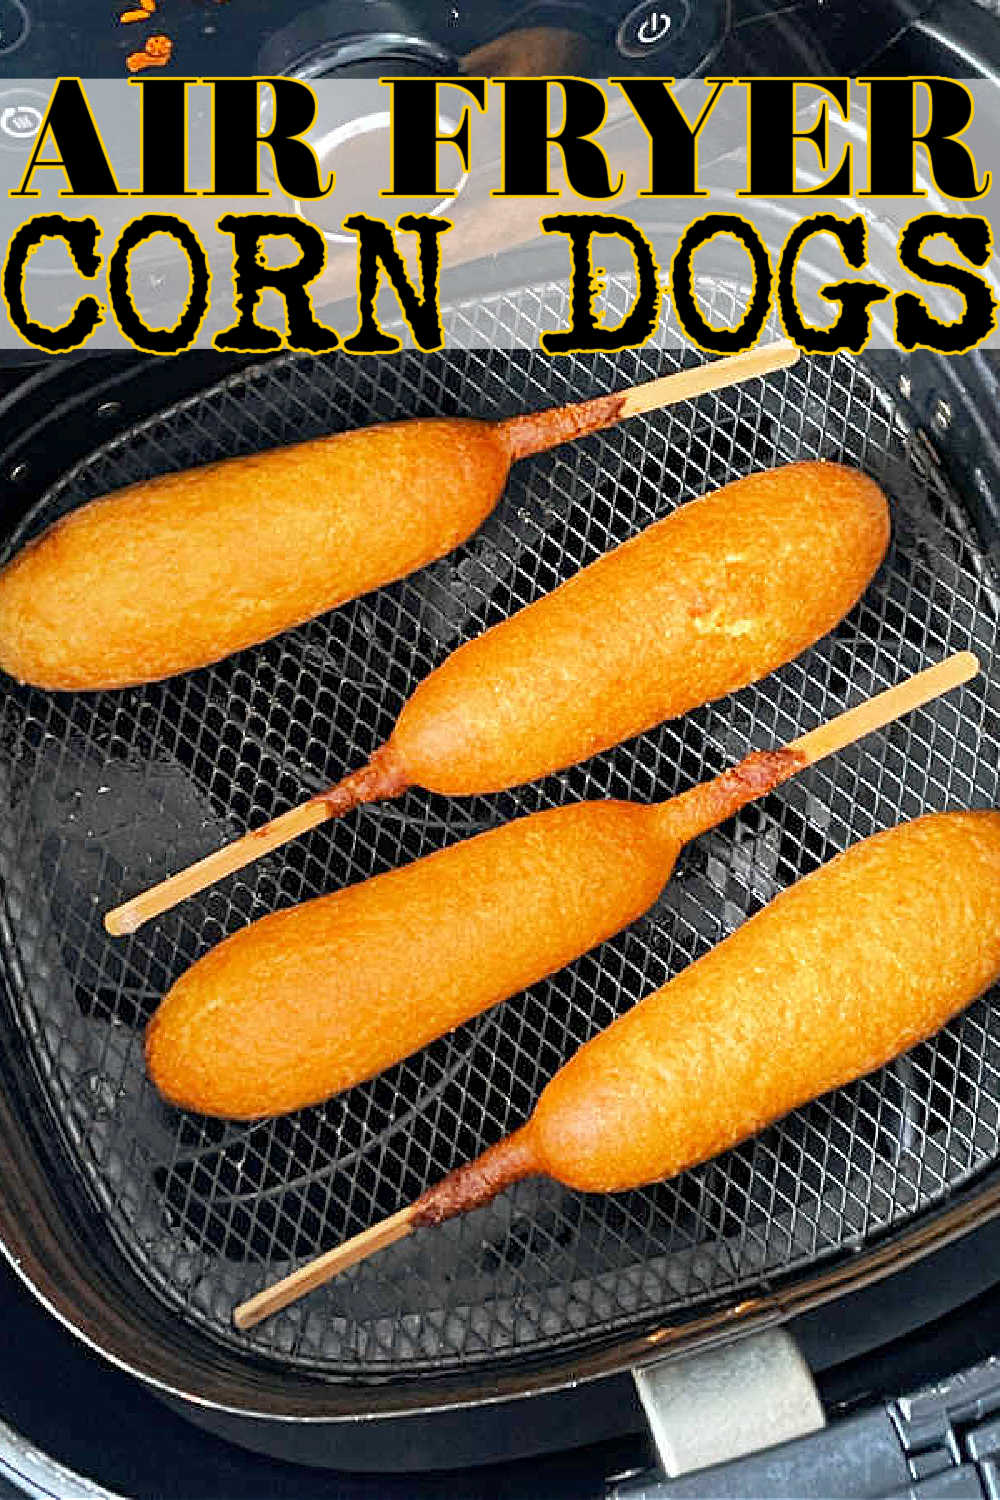 Air Fryer Corn Dogs | Foodtastic Mom #airfryerrecipes #corndogrecipes #airfryercorndogs